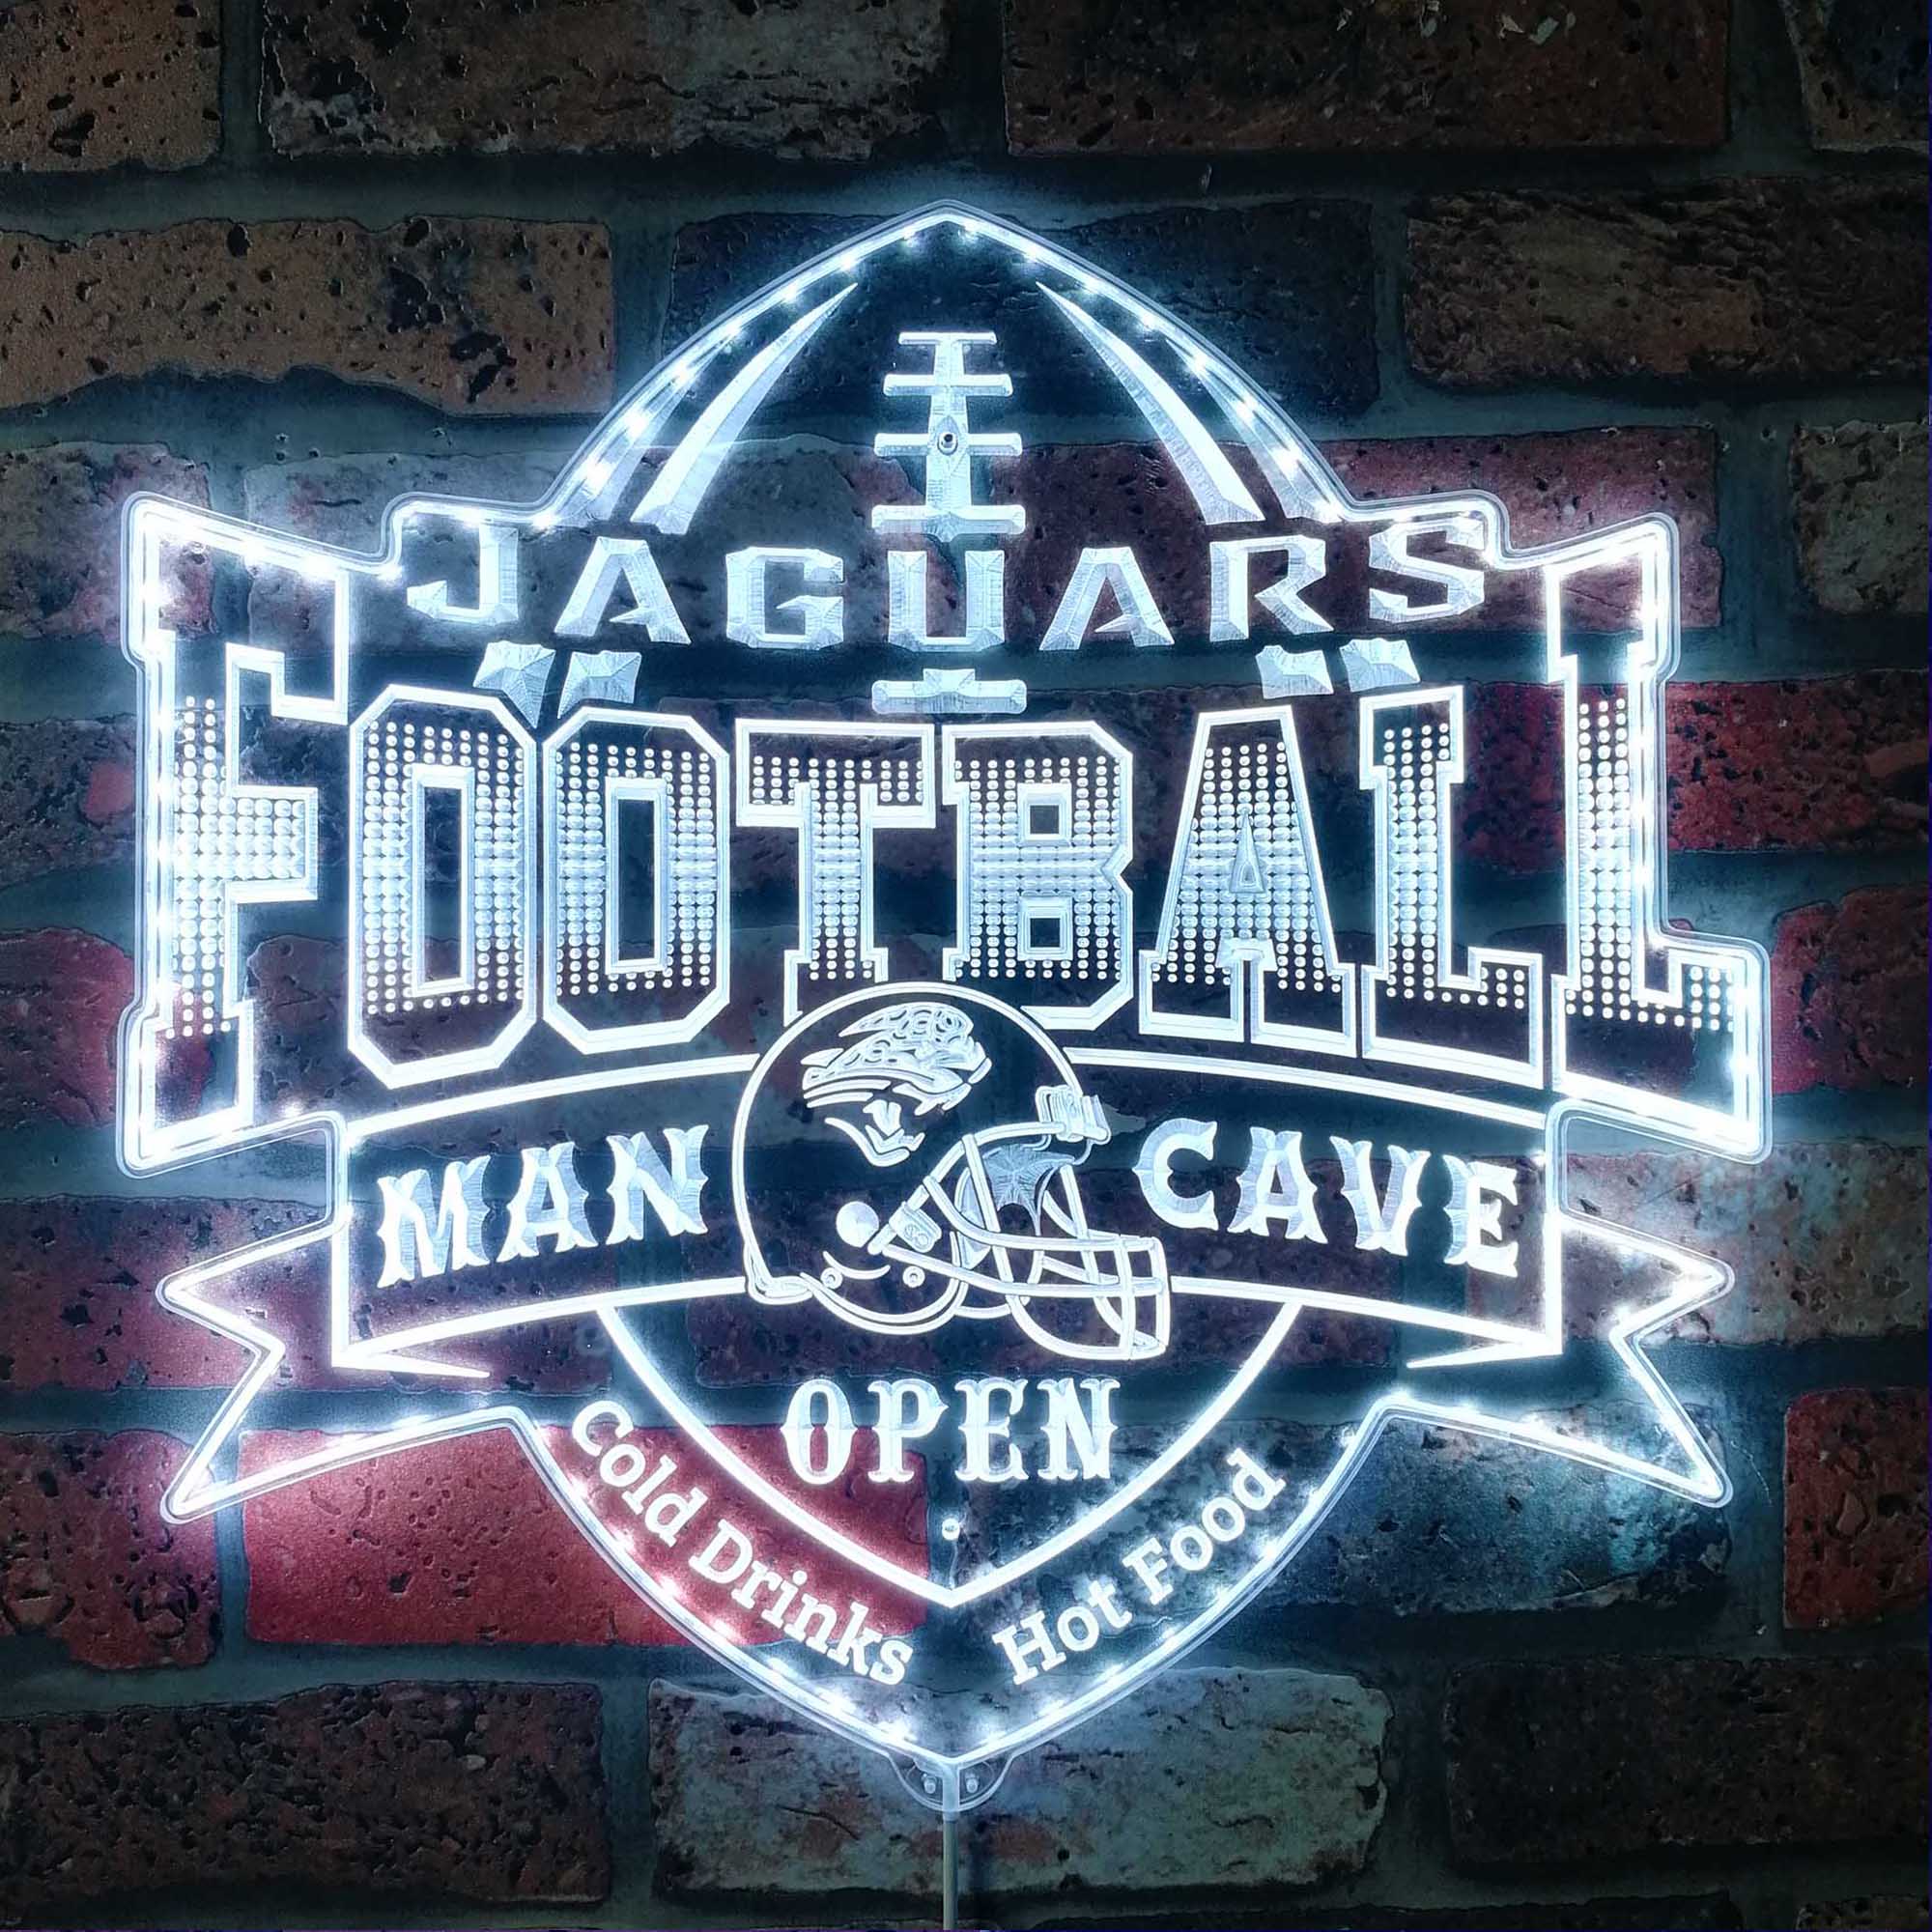 NFL Jacksonville Jaguars Football Dynamic RGB Edge Lit LED Sign